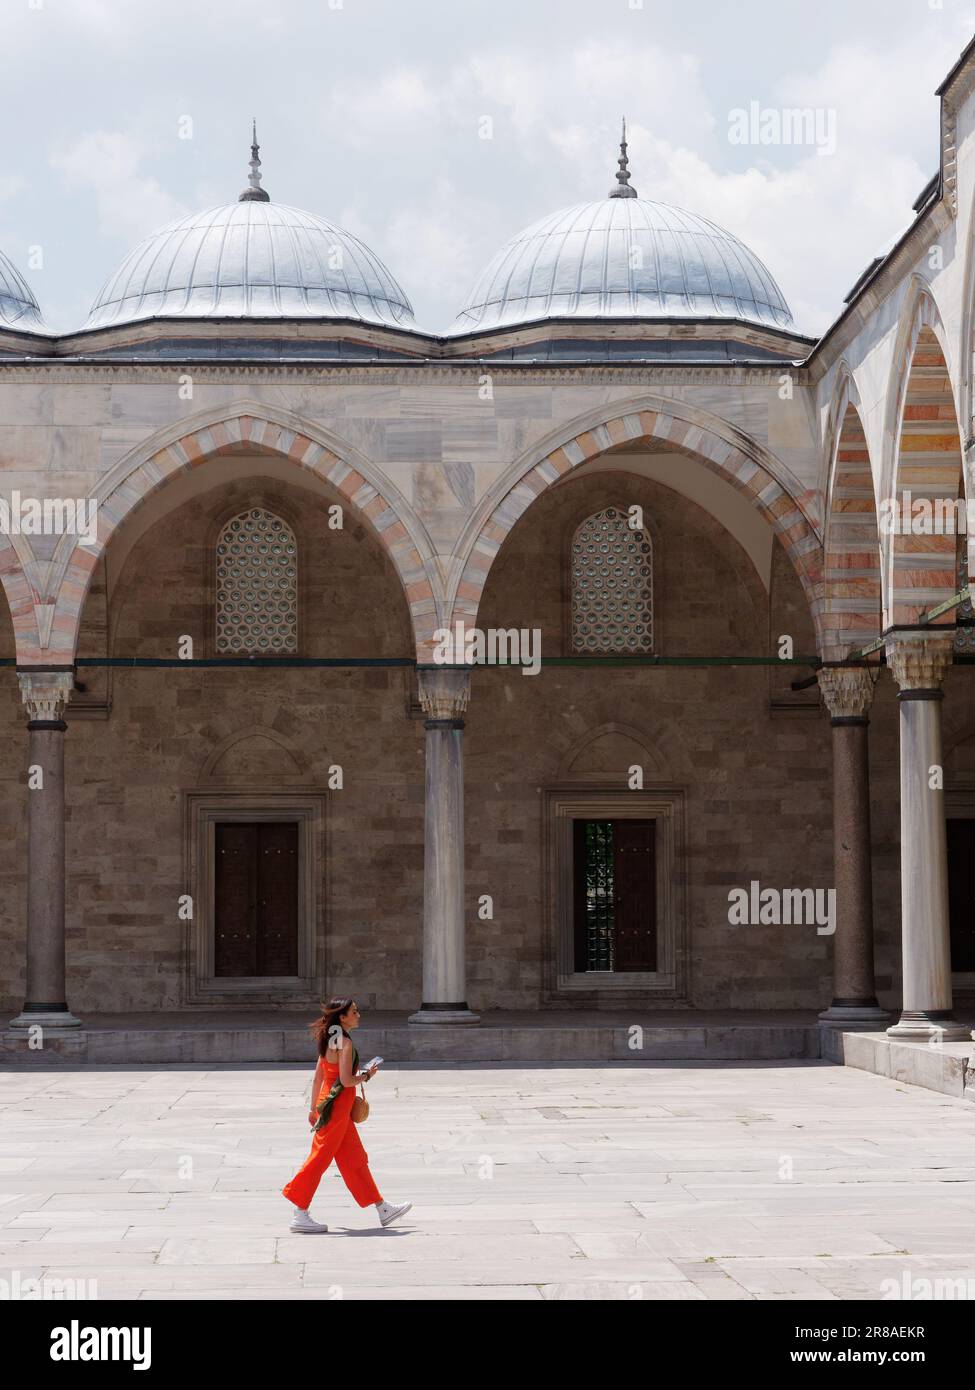 Lady in orange walking in the courtyard aka sahn of the Suleymaniye Mosque, Istanbul, Turkey Stock Photo